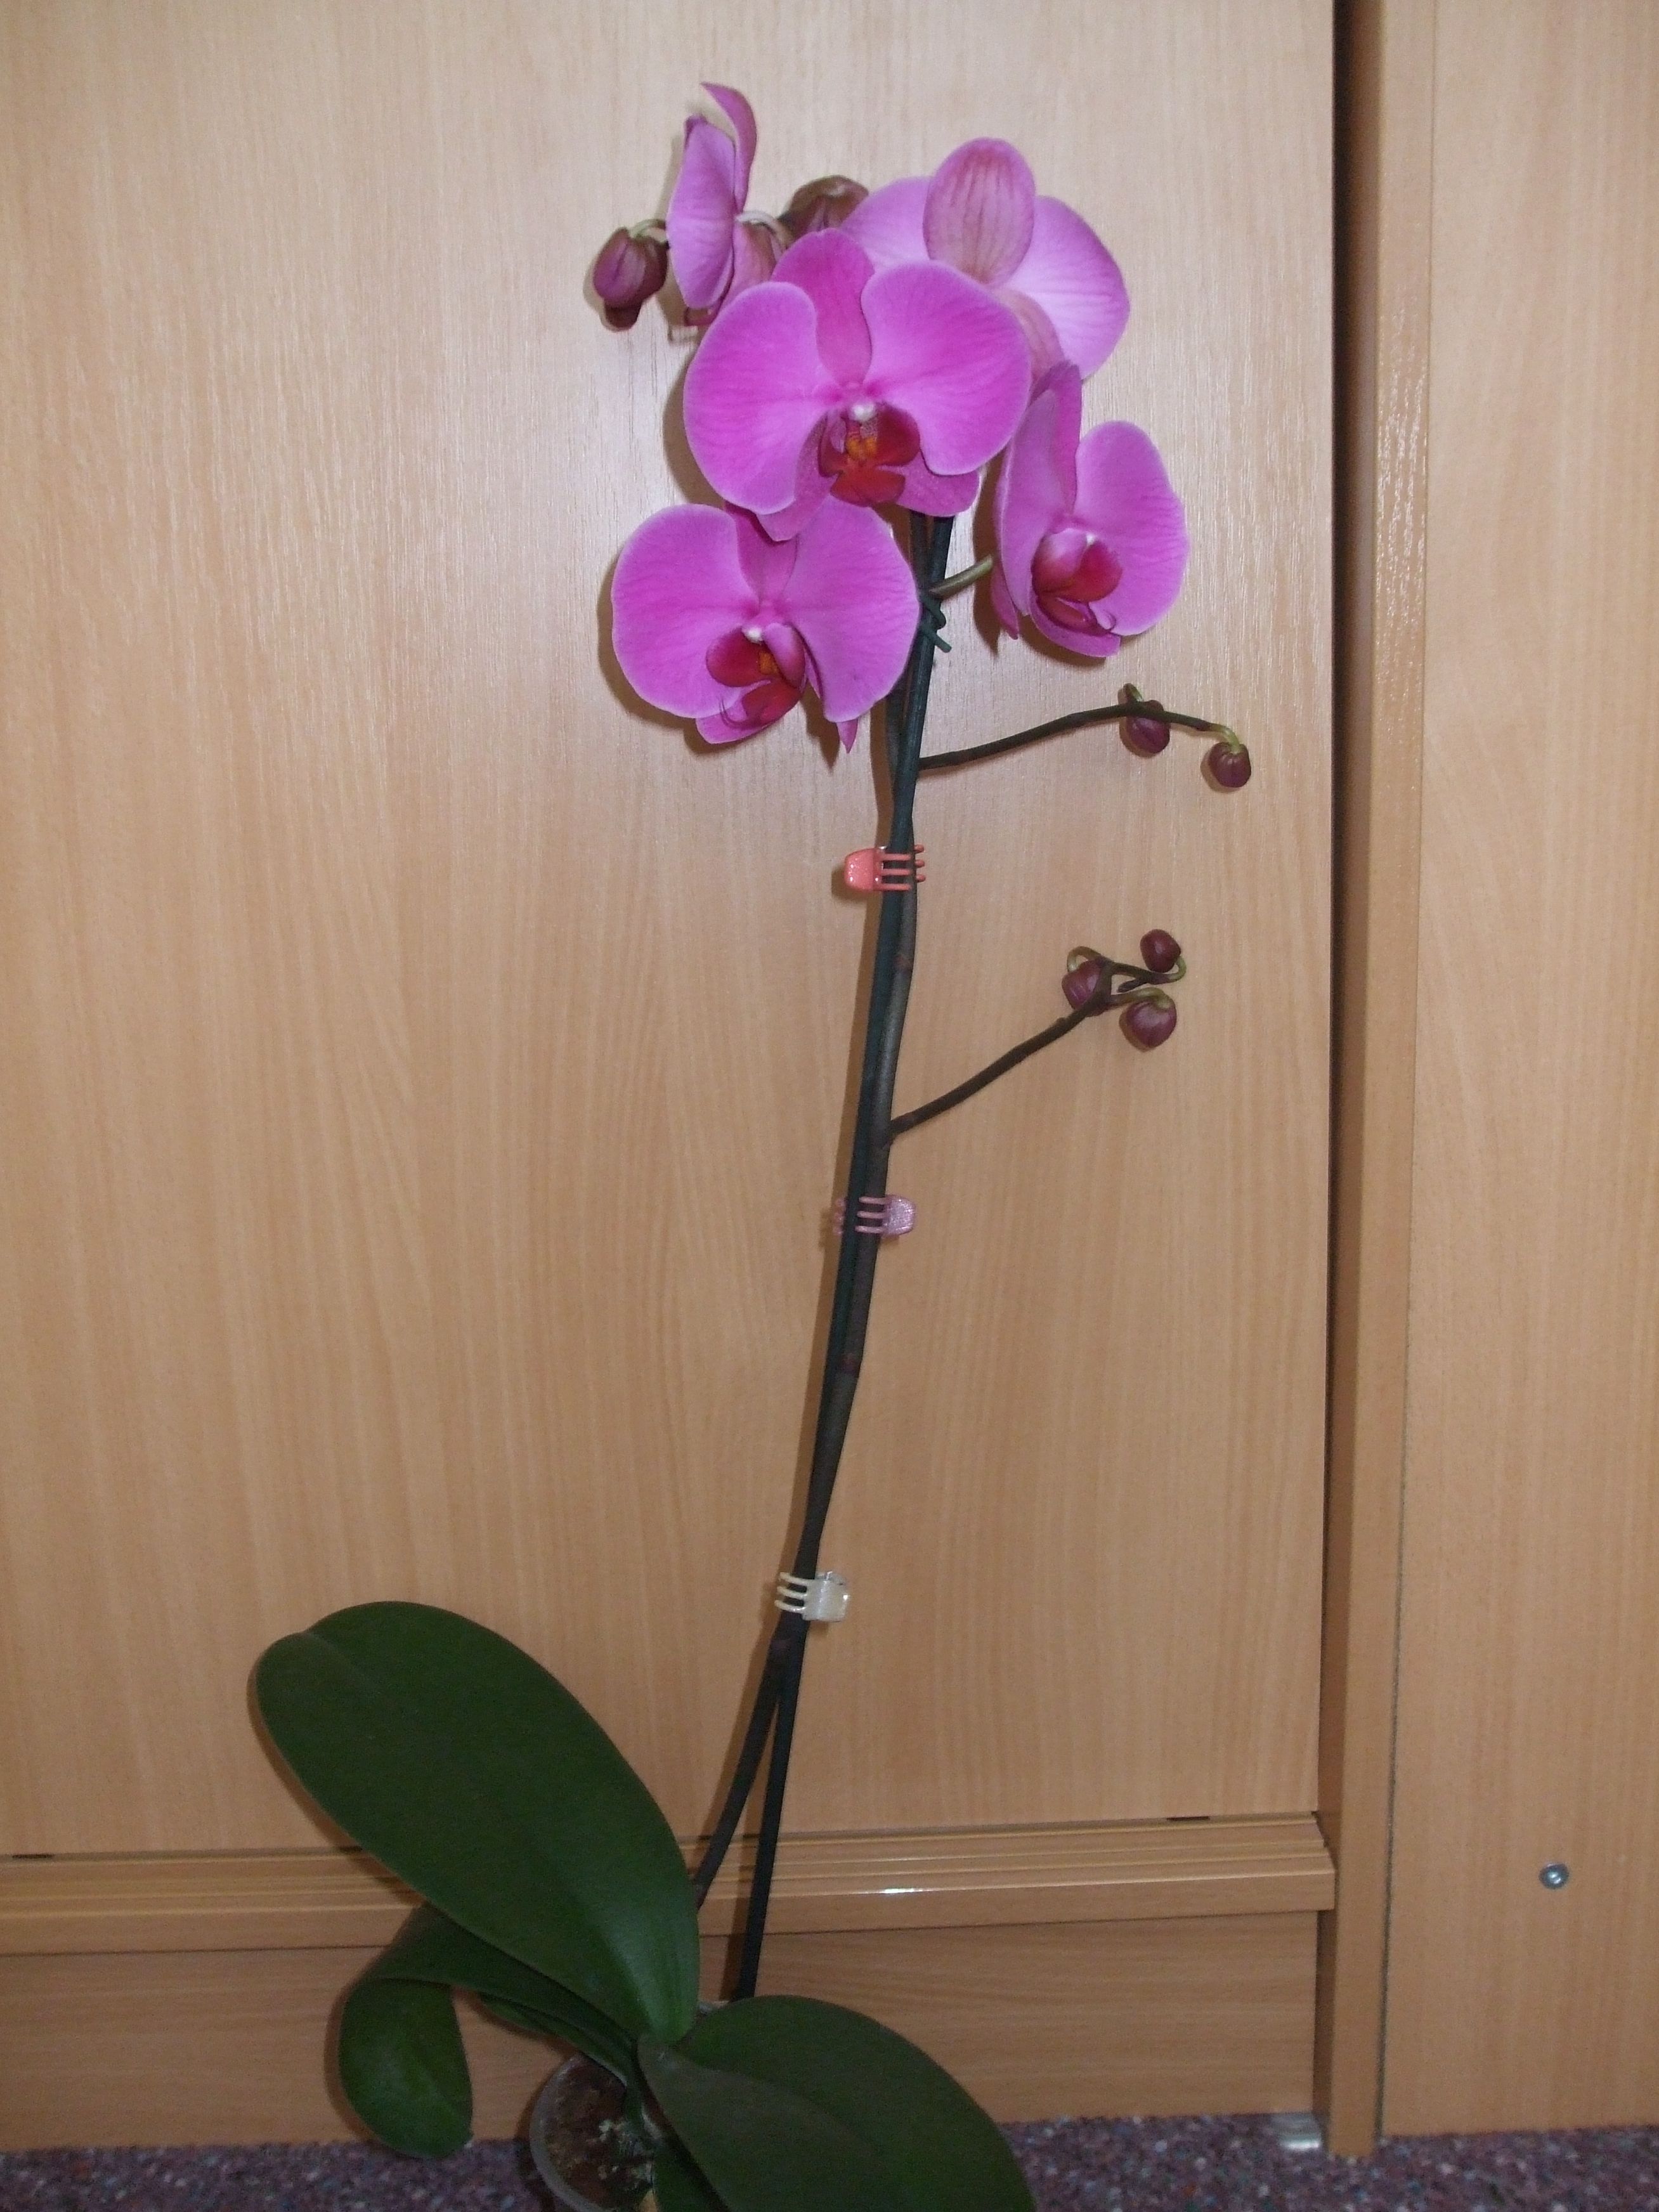 File:Phalaenopsis (violet).jpg - Wikimedia Commons